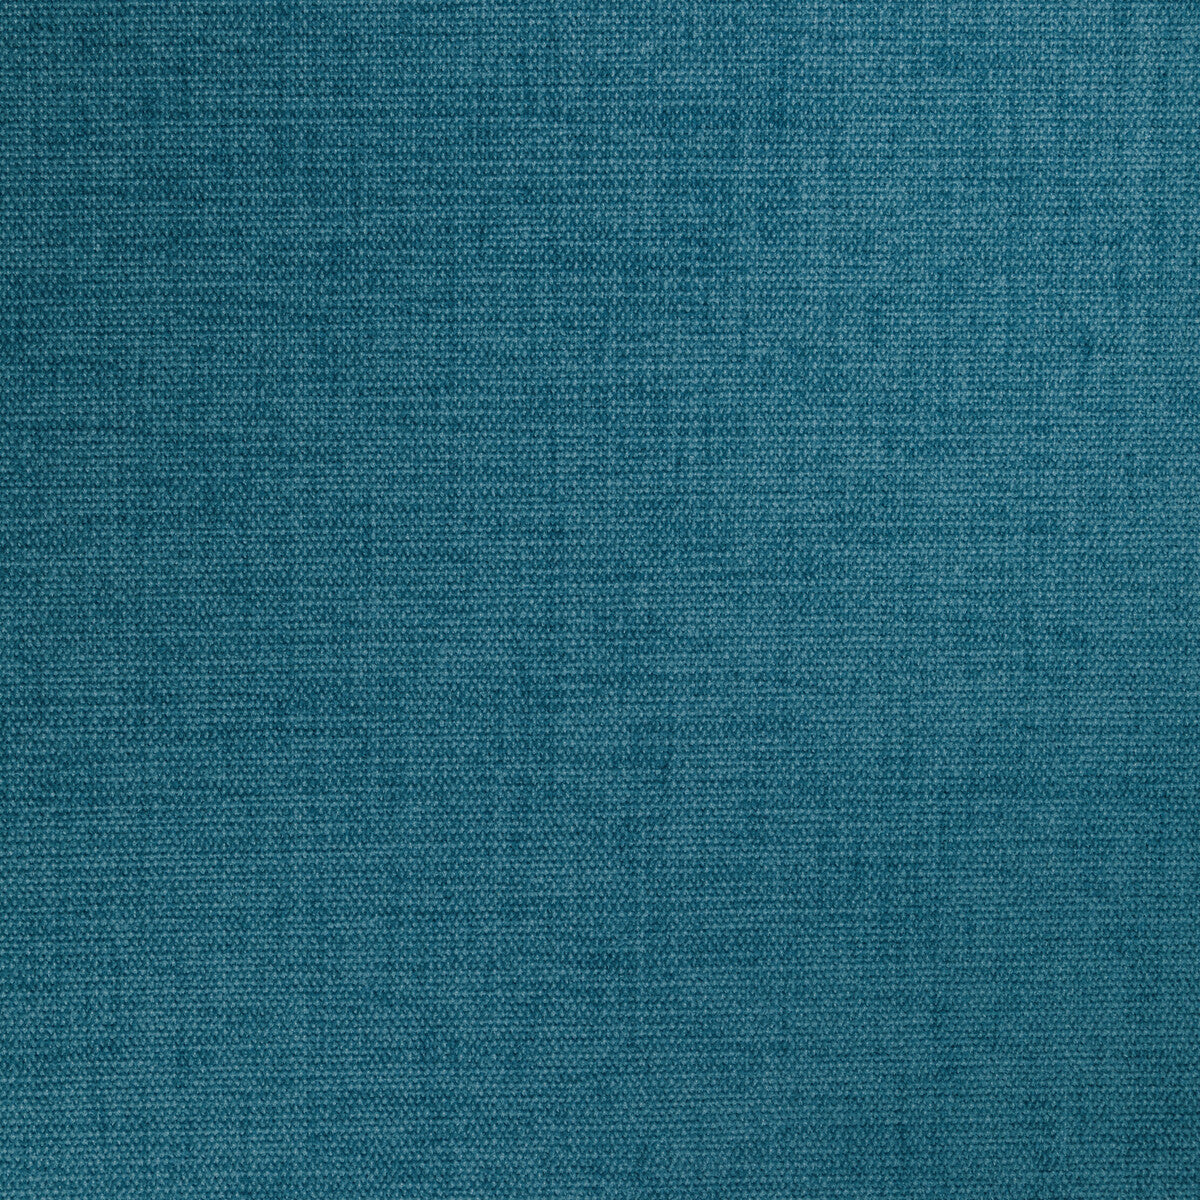 Kravet Smart fabric in 34959-55 color - pattern 34959.55.0 - by Kravet Smart in the Performance Kravetarmor collection